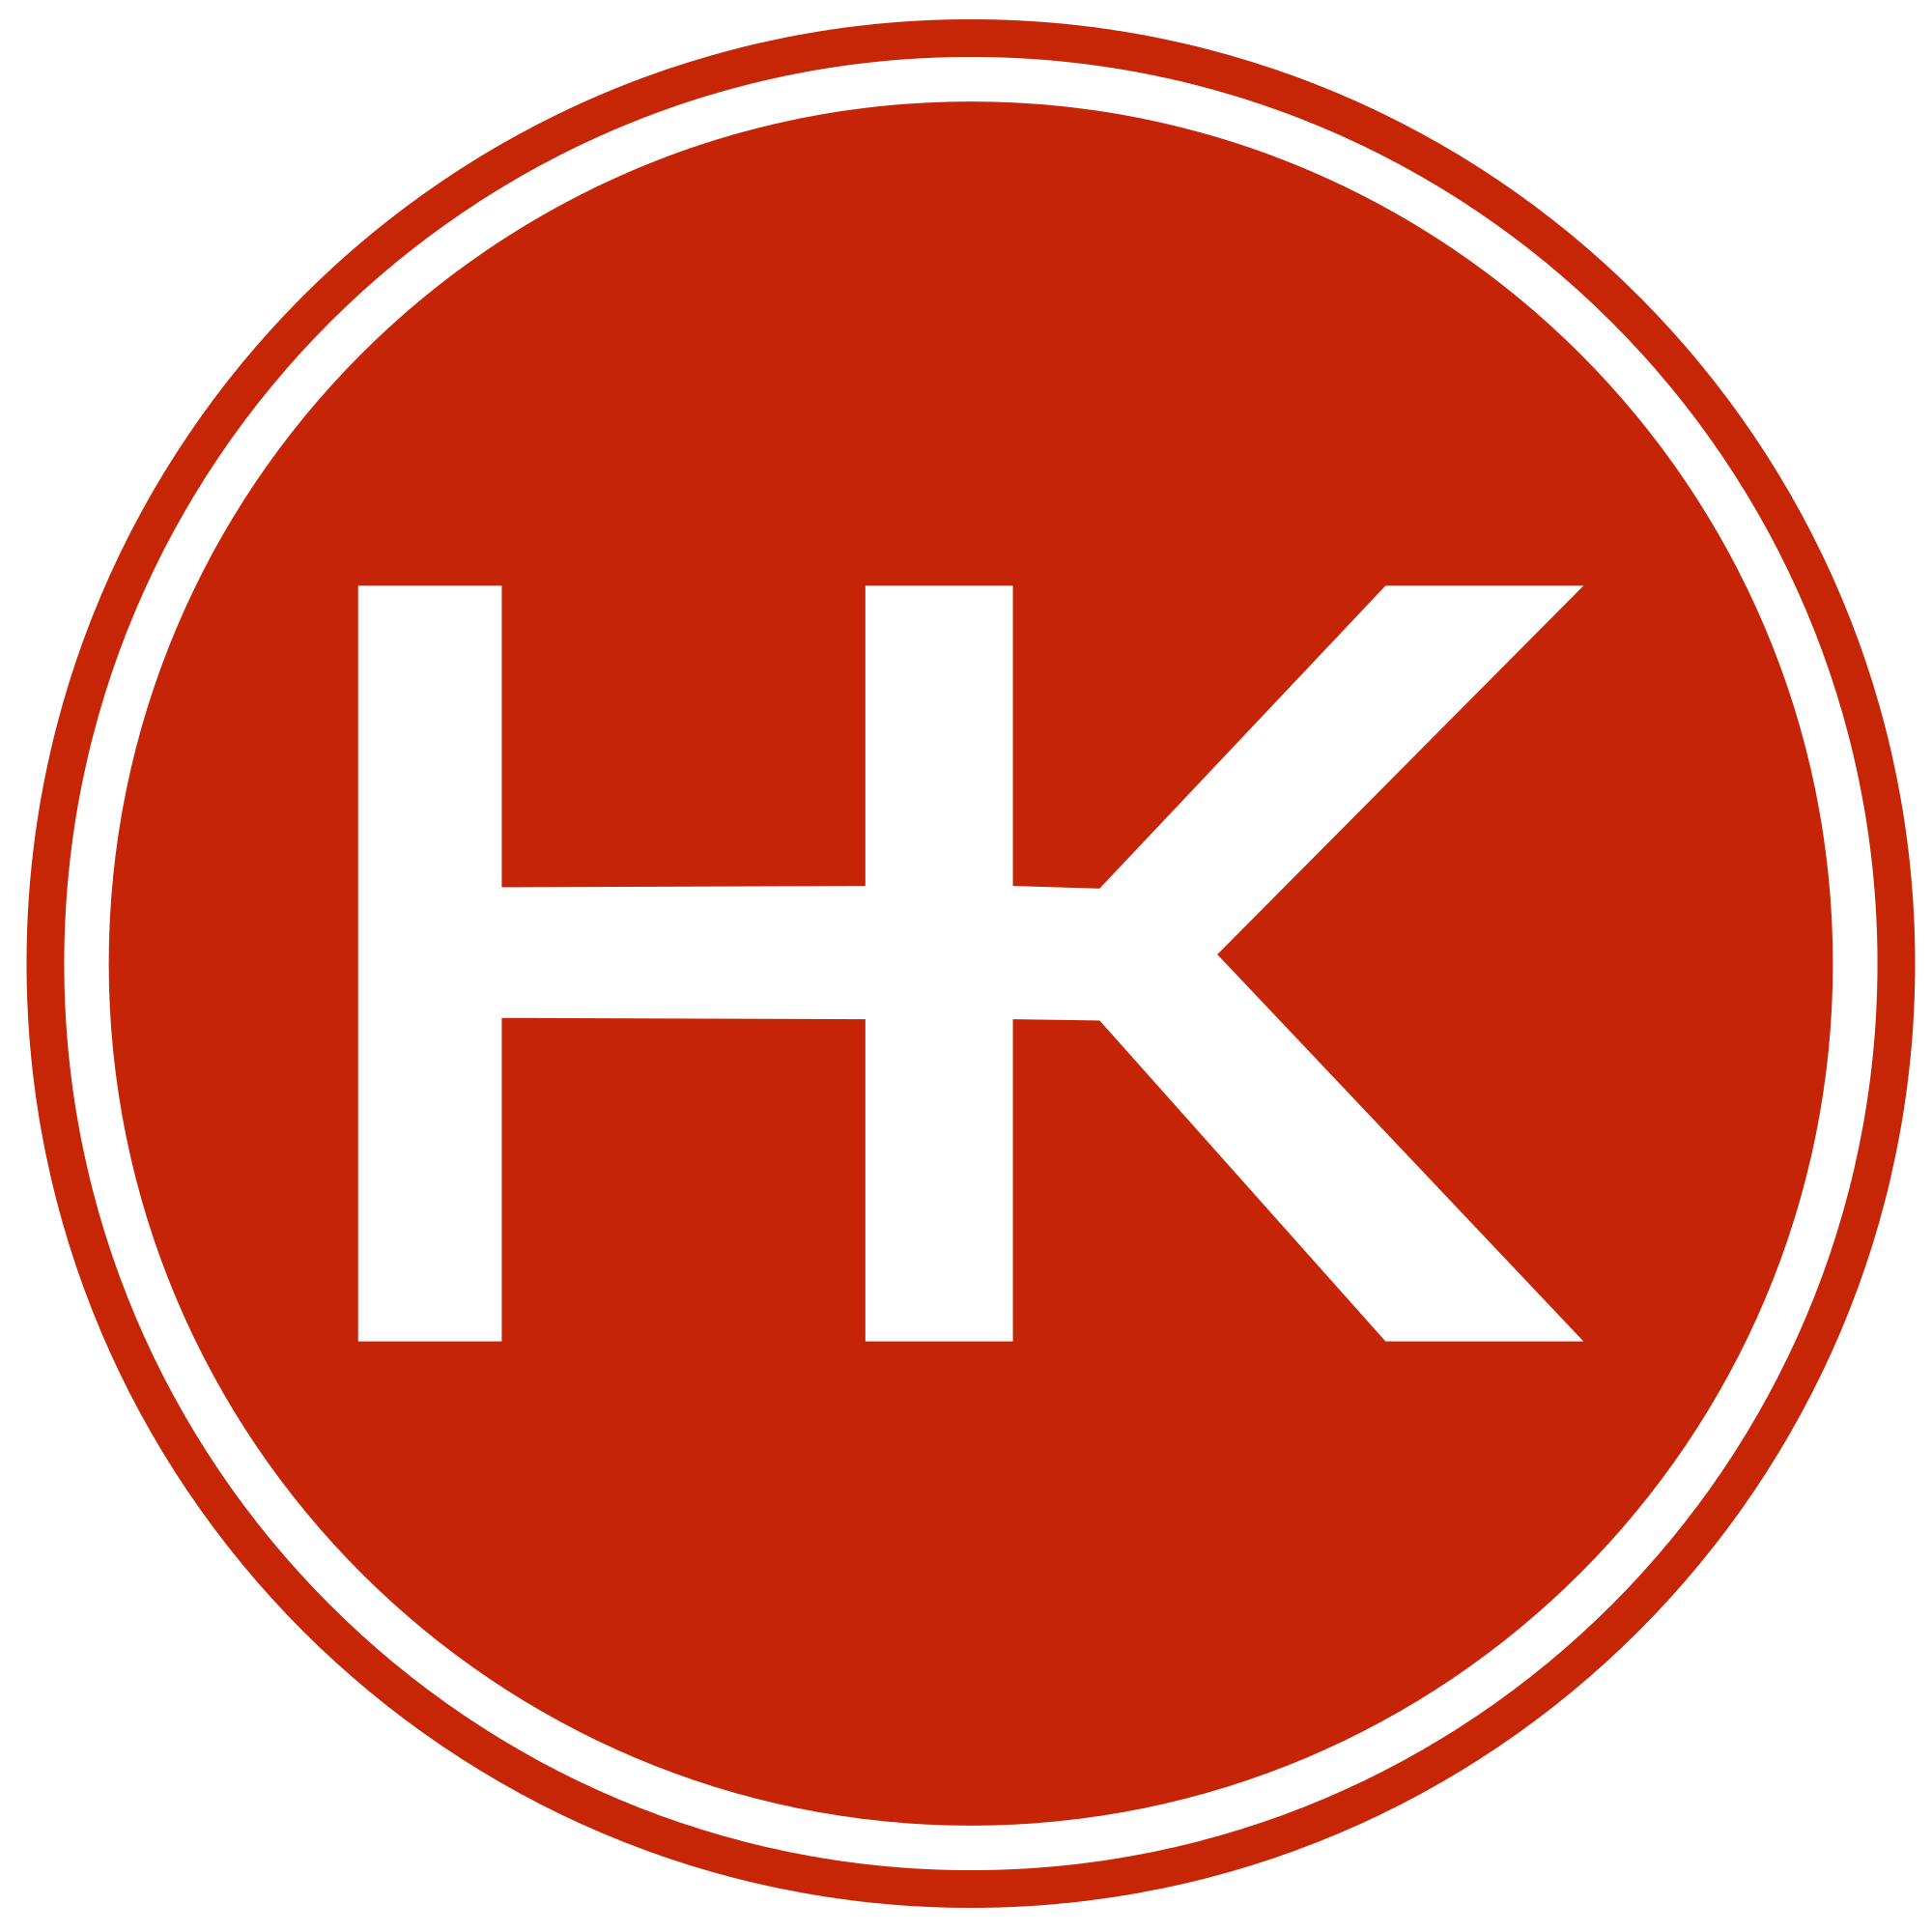 HK Logo - Image - HK-0.png | Logopedia | FANDOM powered by Wikia